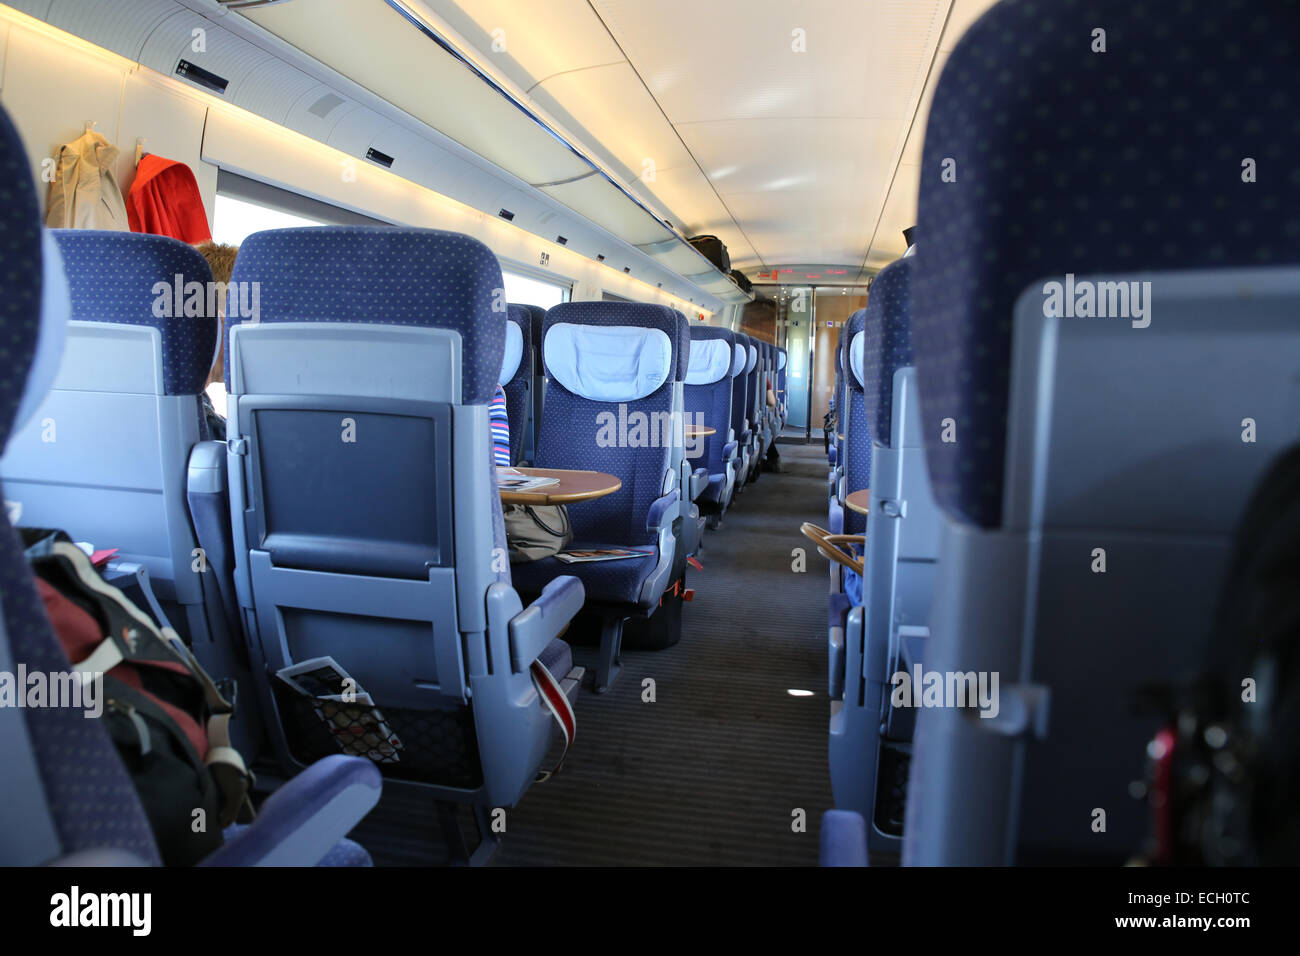 german train interior seats Stock Photo